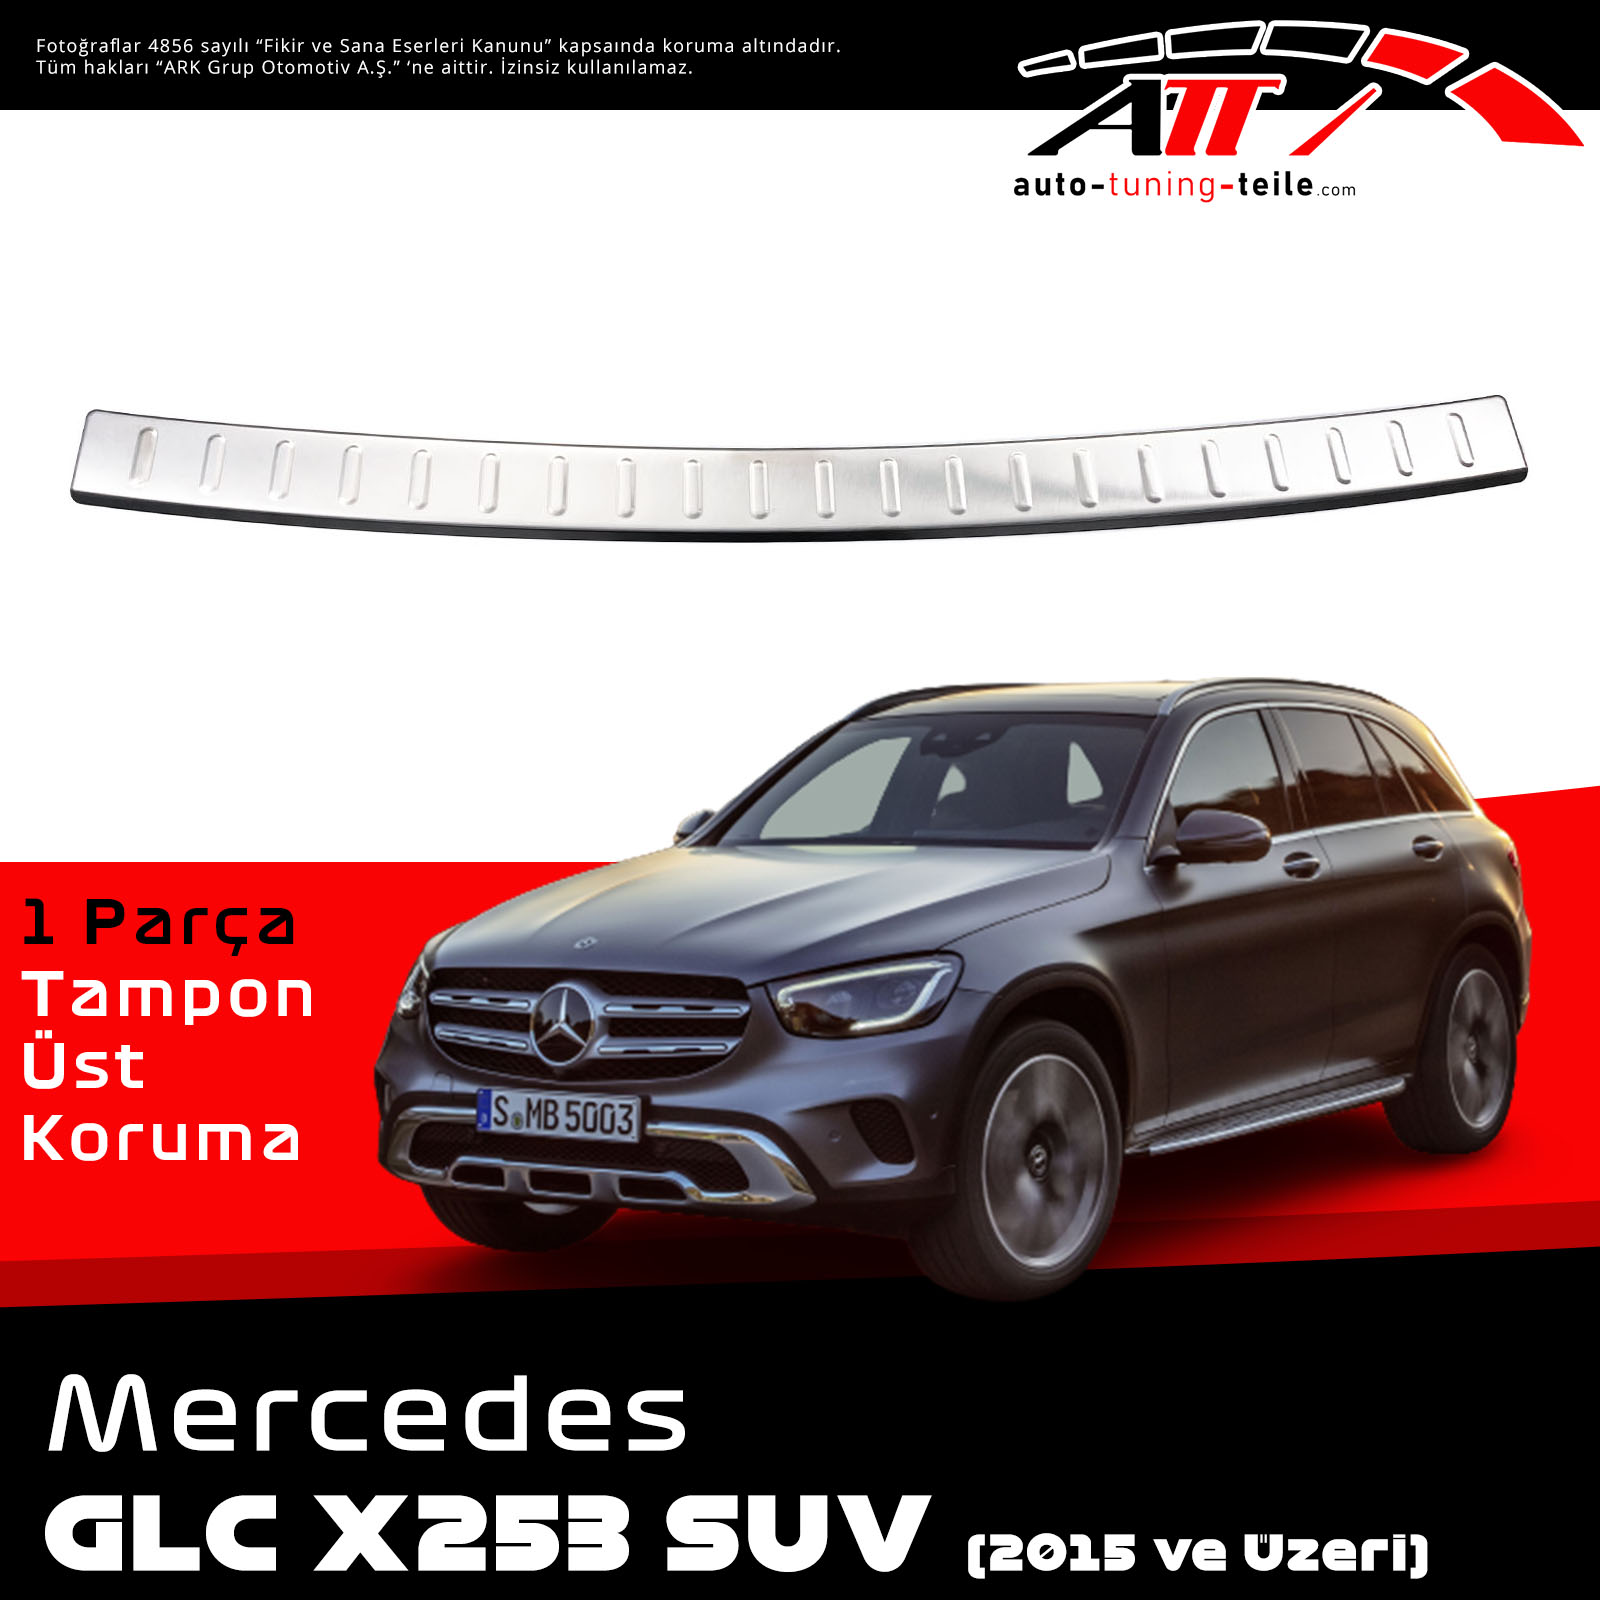 MERCEDES BENZ GLC X253 SUV 2015 ARKA TAMPON ÜSTÜ CHROME